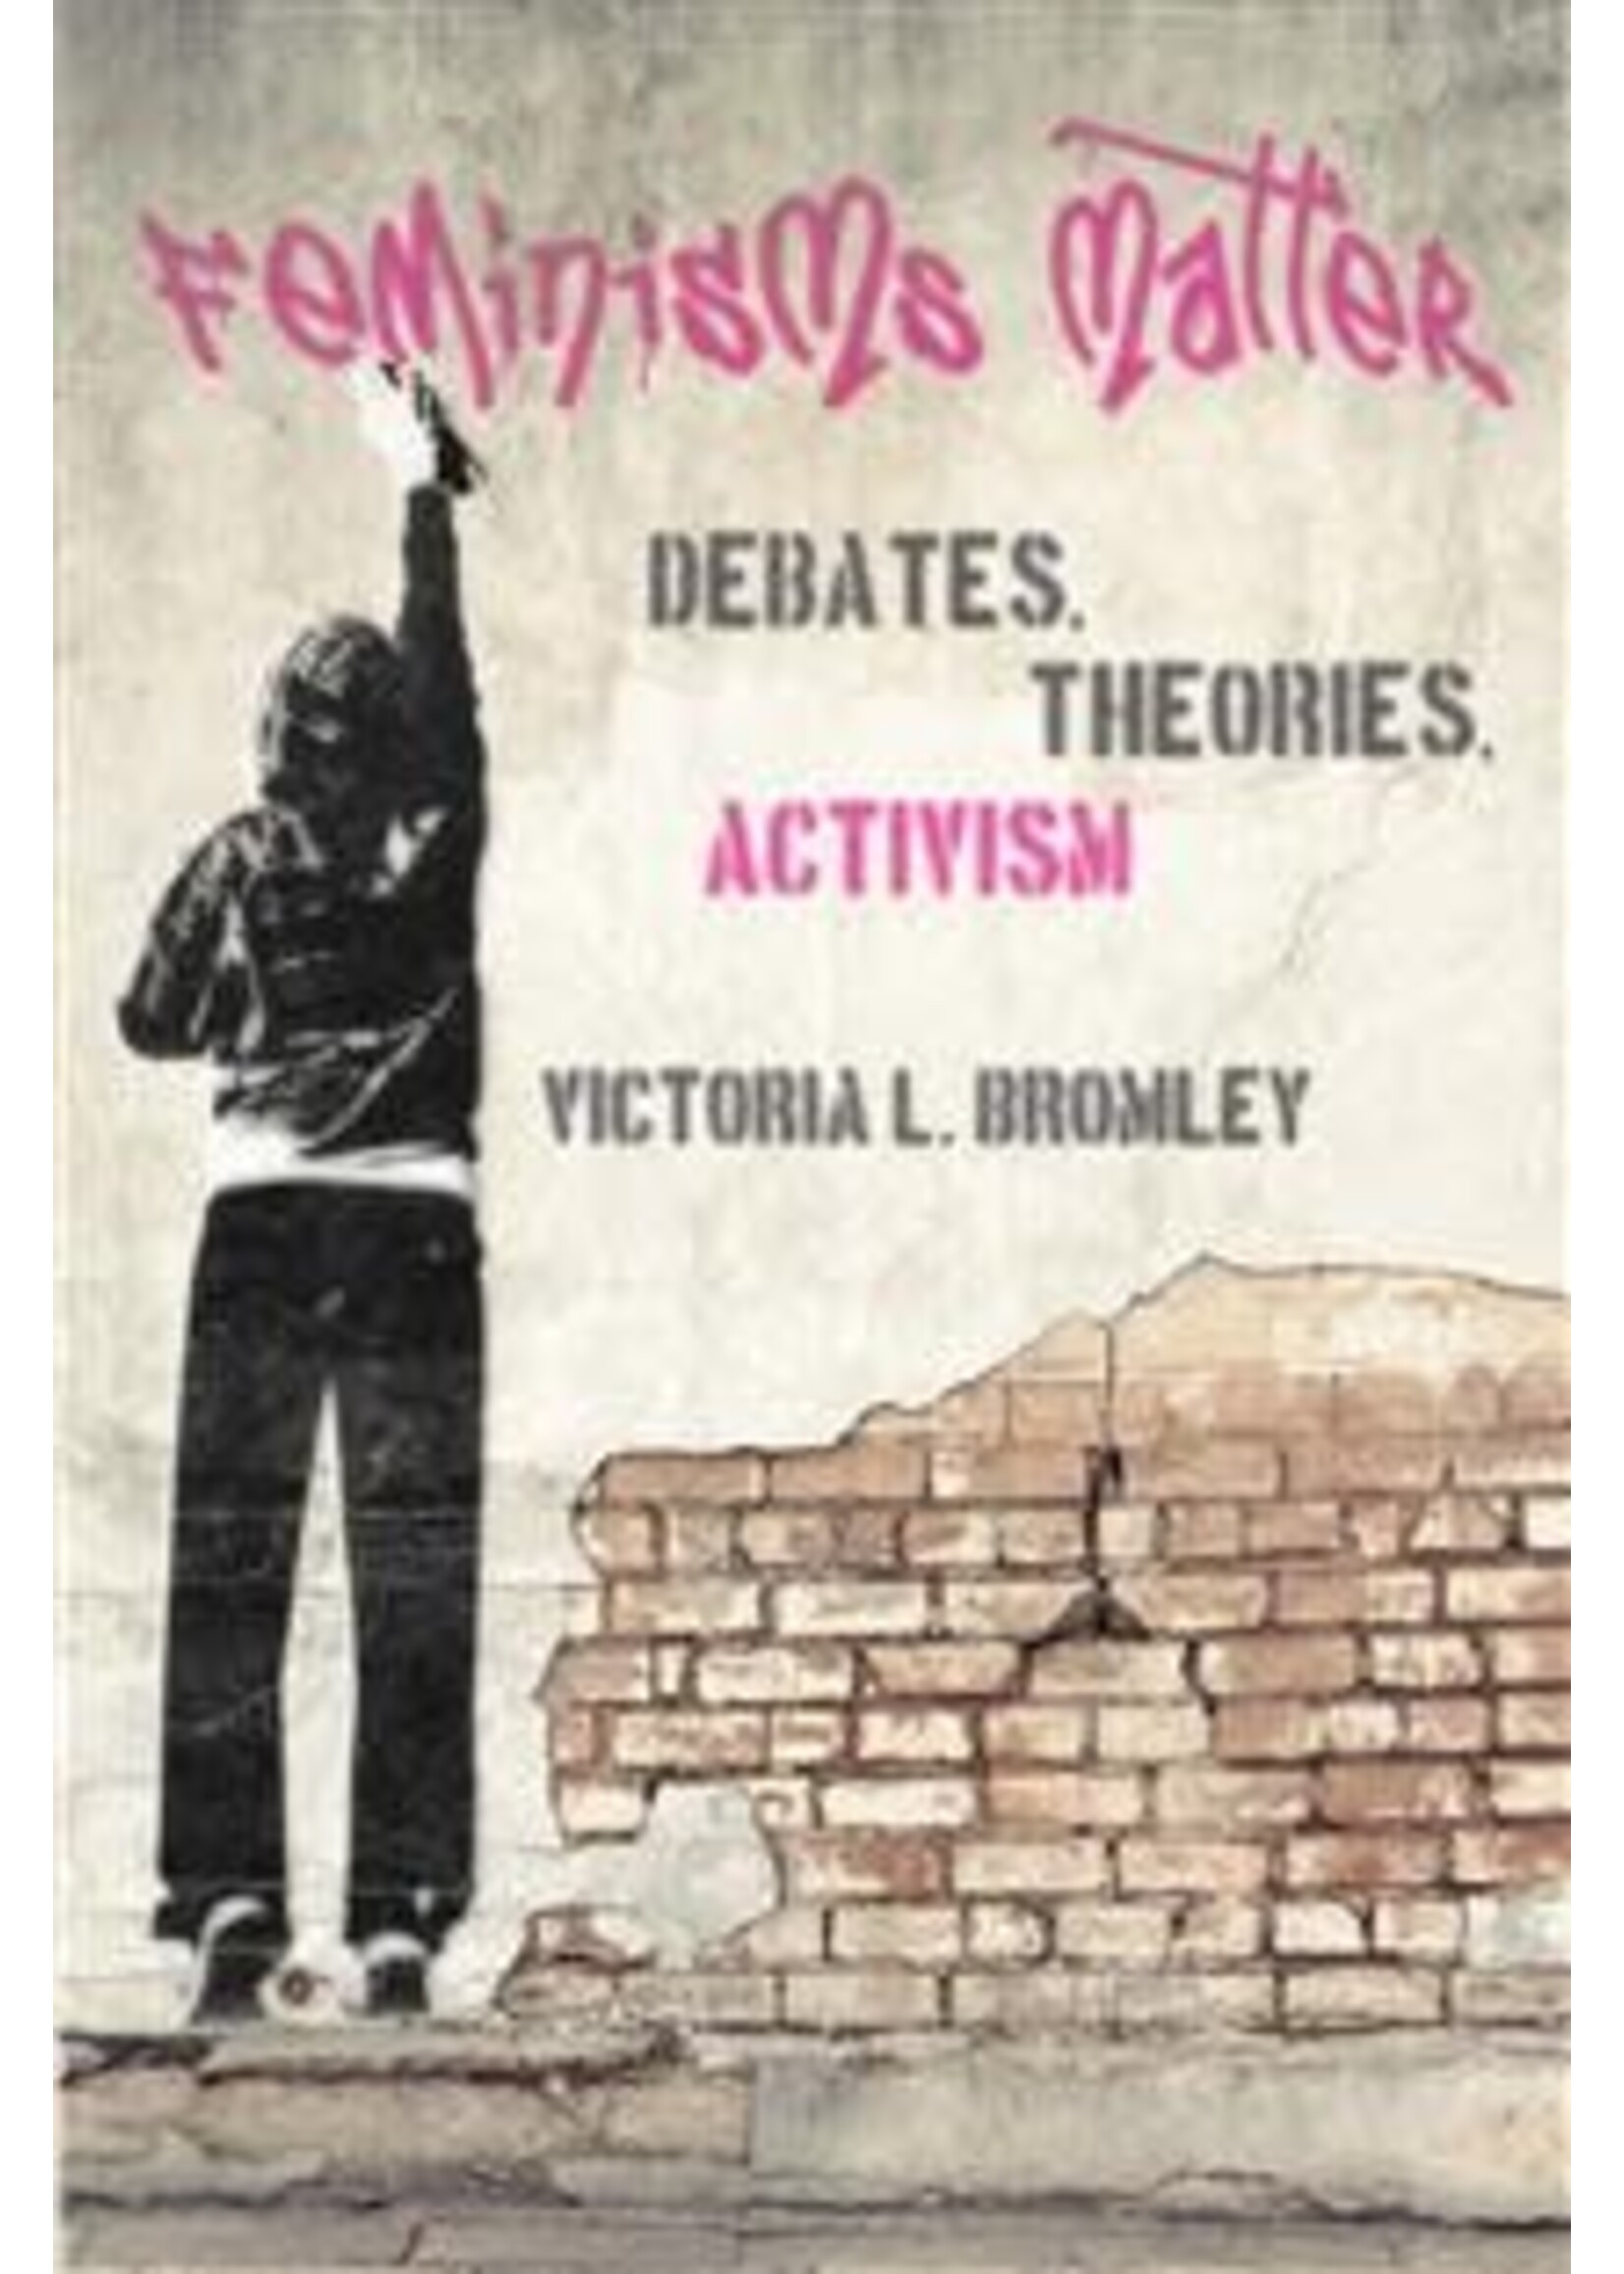 Feminisms Matter: Debates, Theories, Activism by Victoria L. Bromley